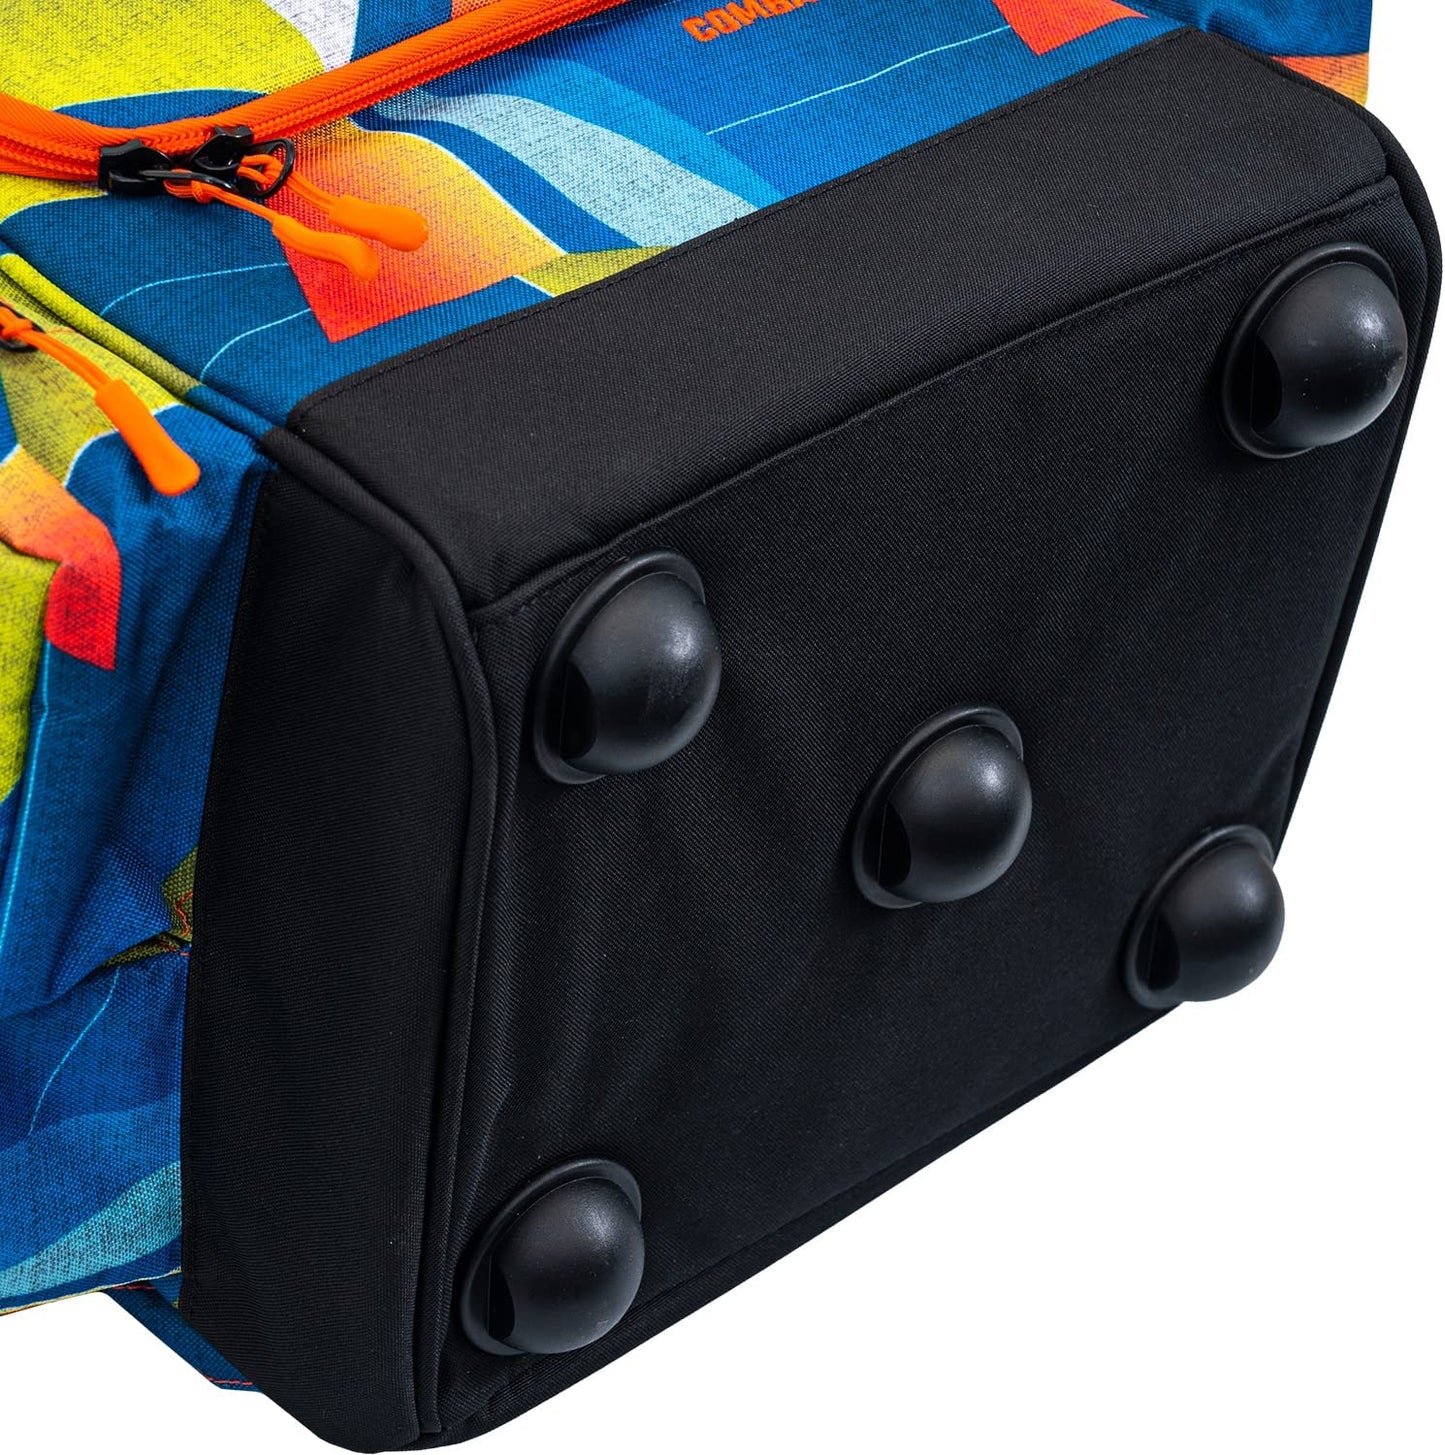 Dynamic Discs Combat Sniper Backpack Disc Golf Bag - Toucan